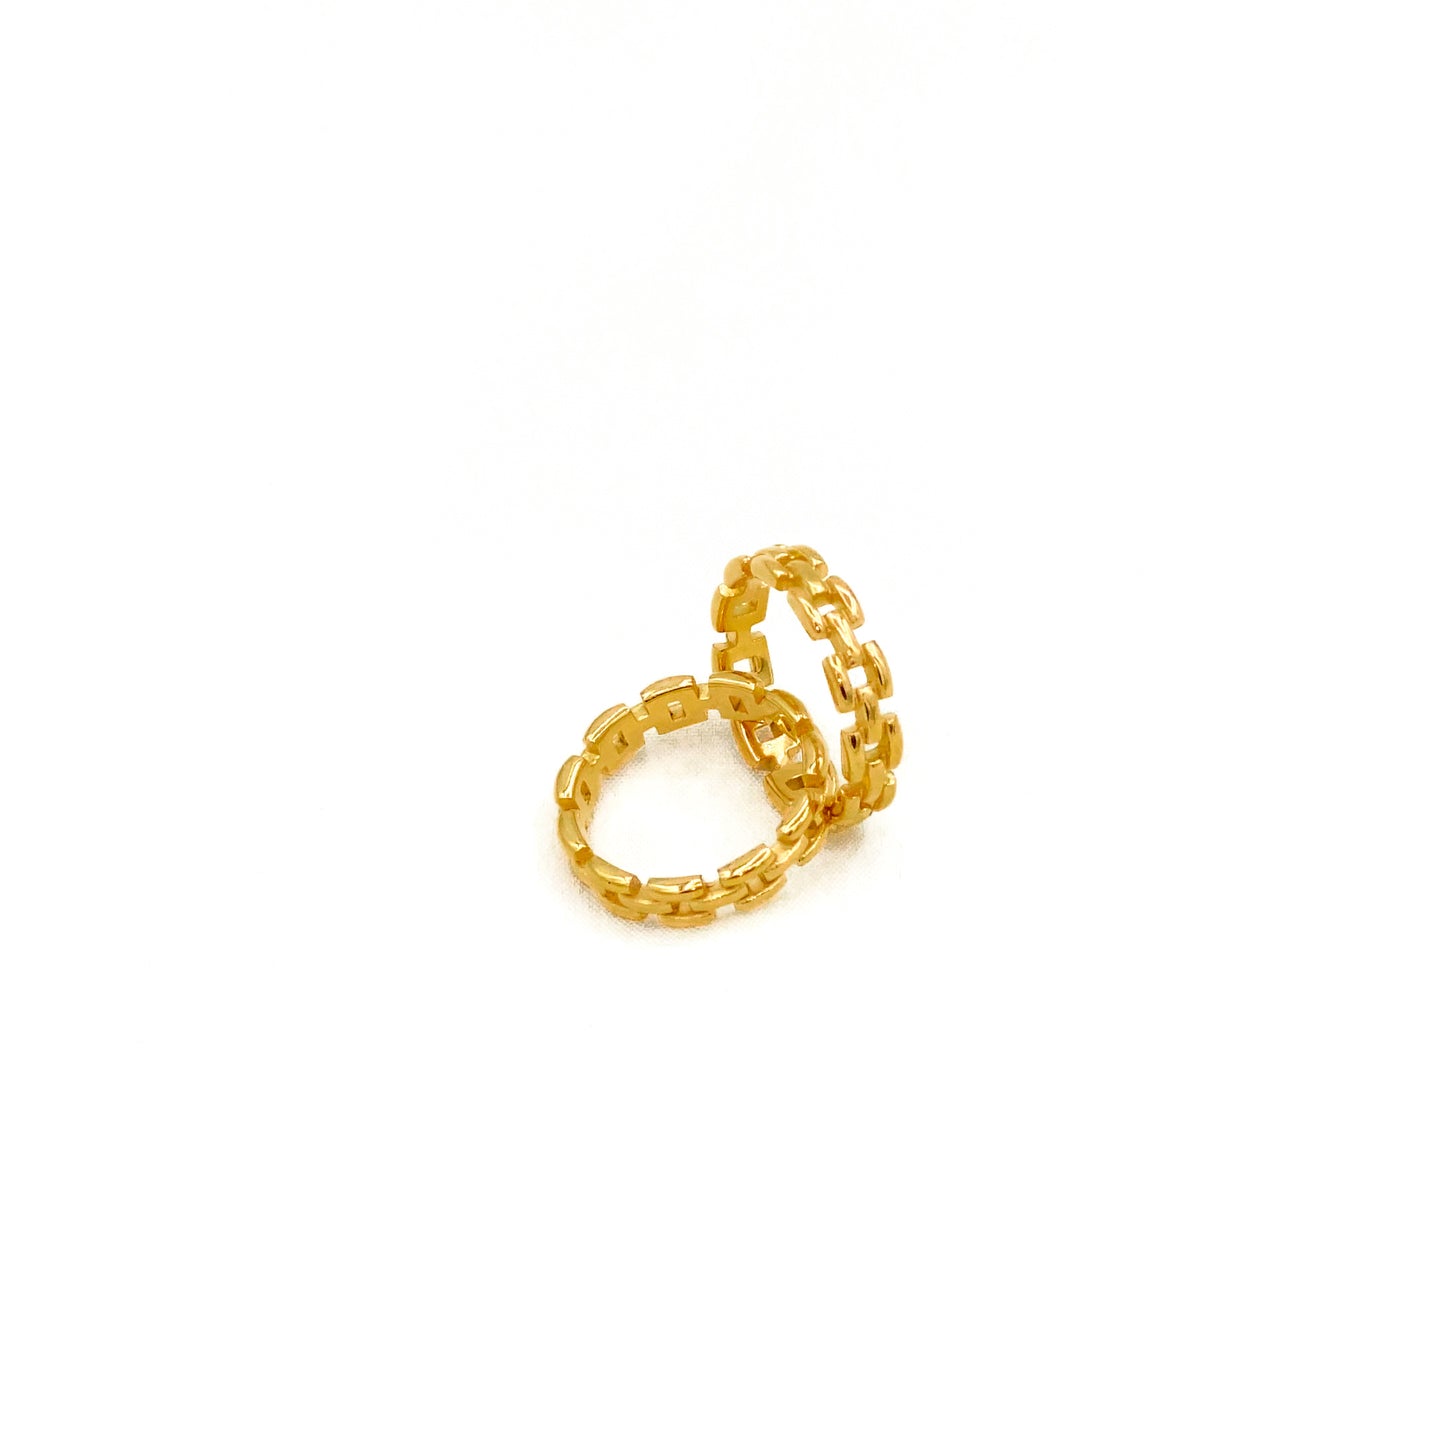 Paris Chain Ring